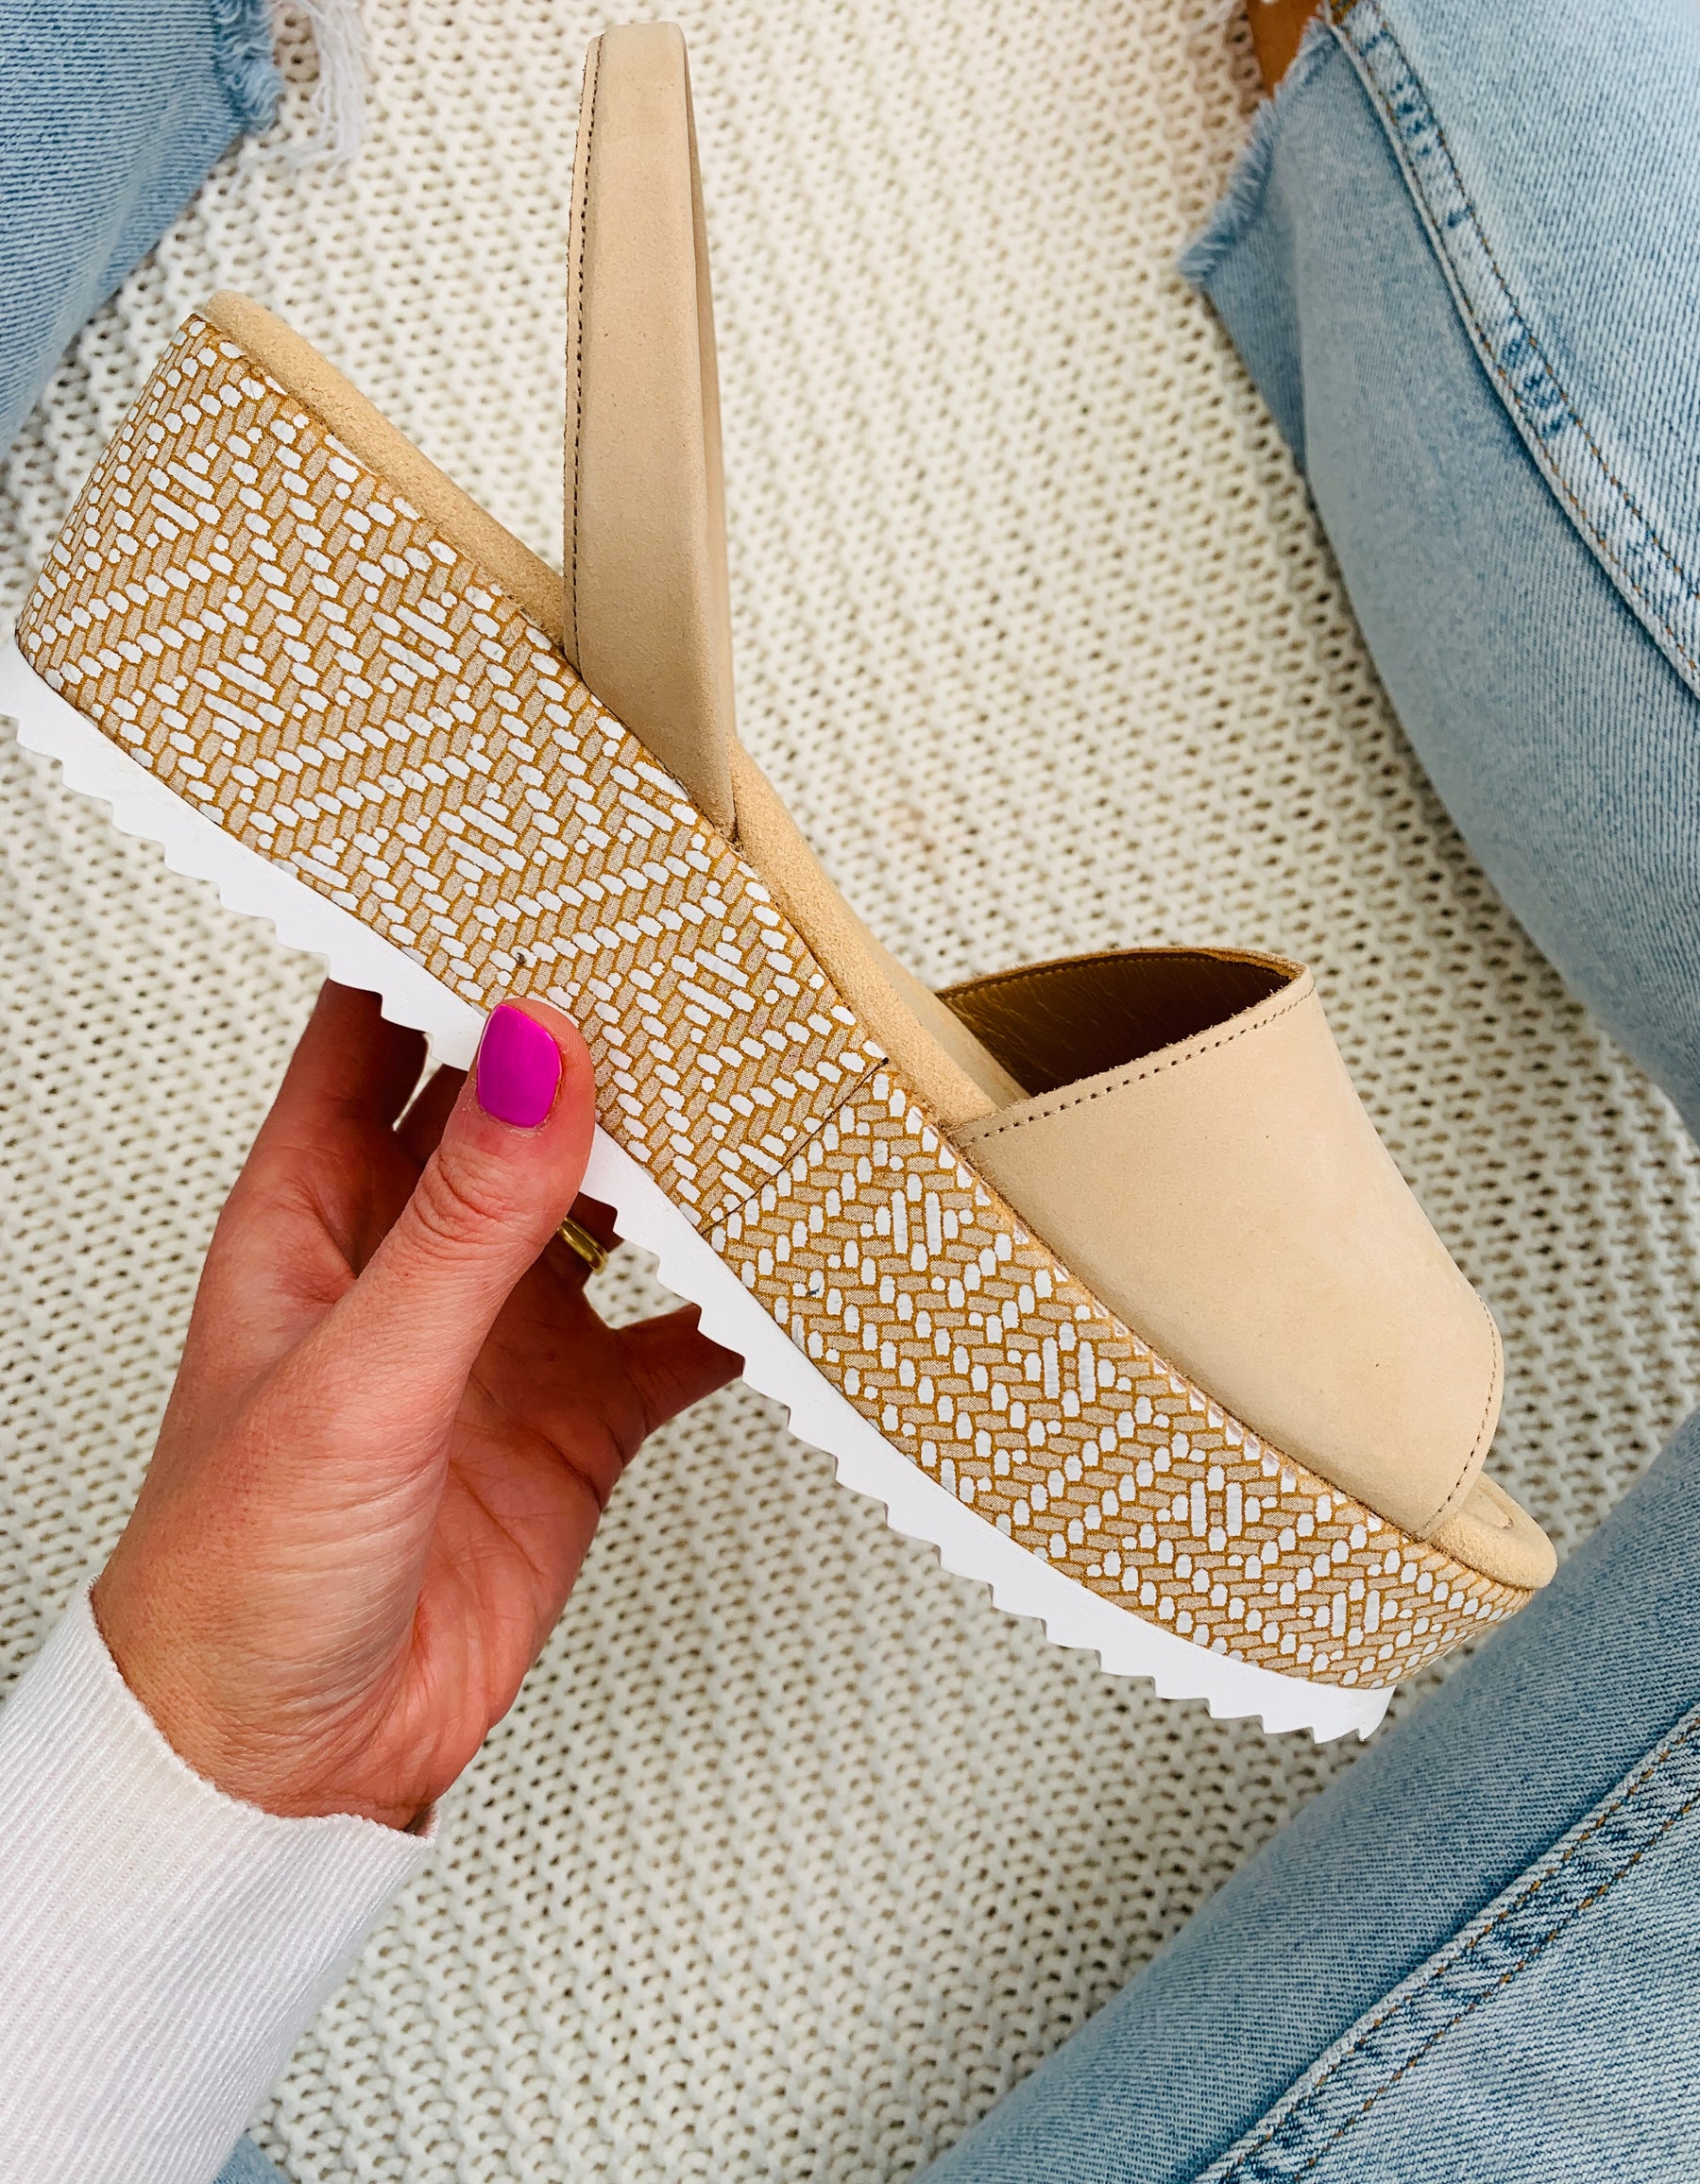 Sand nubuck peep toe with aztec detail on sole. Comfortable, medium height espadrille wedge platform avarca sandals